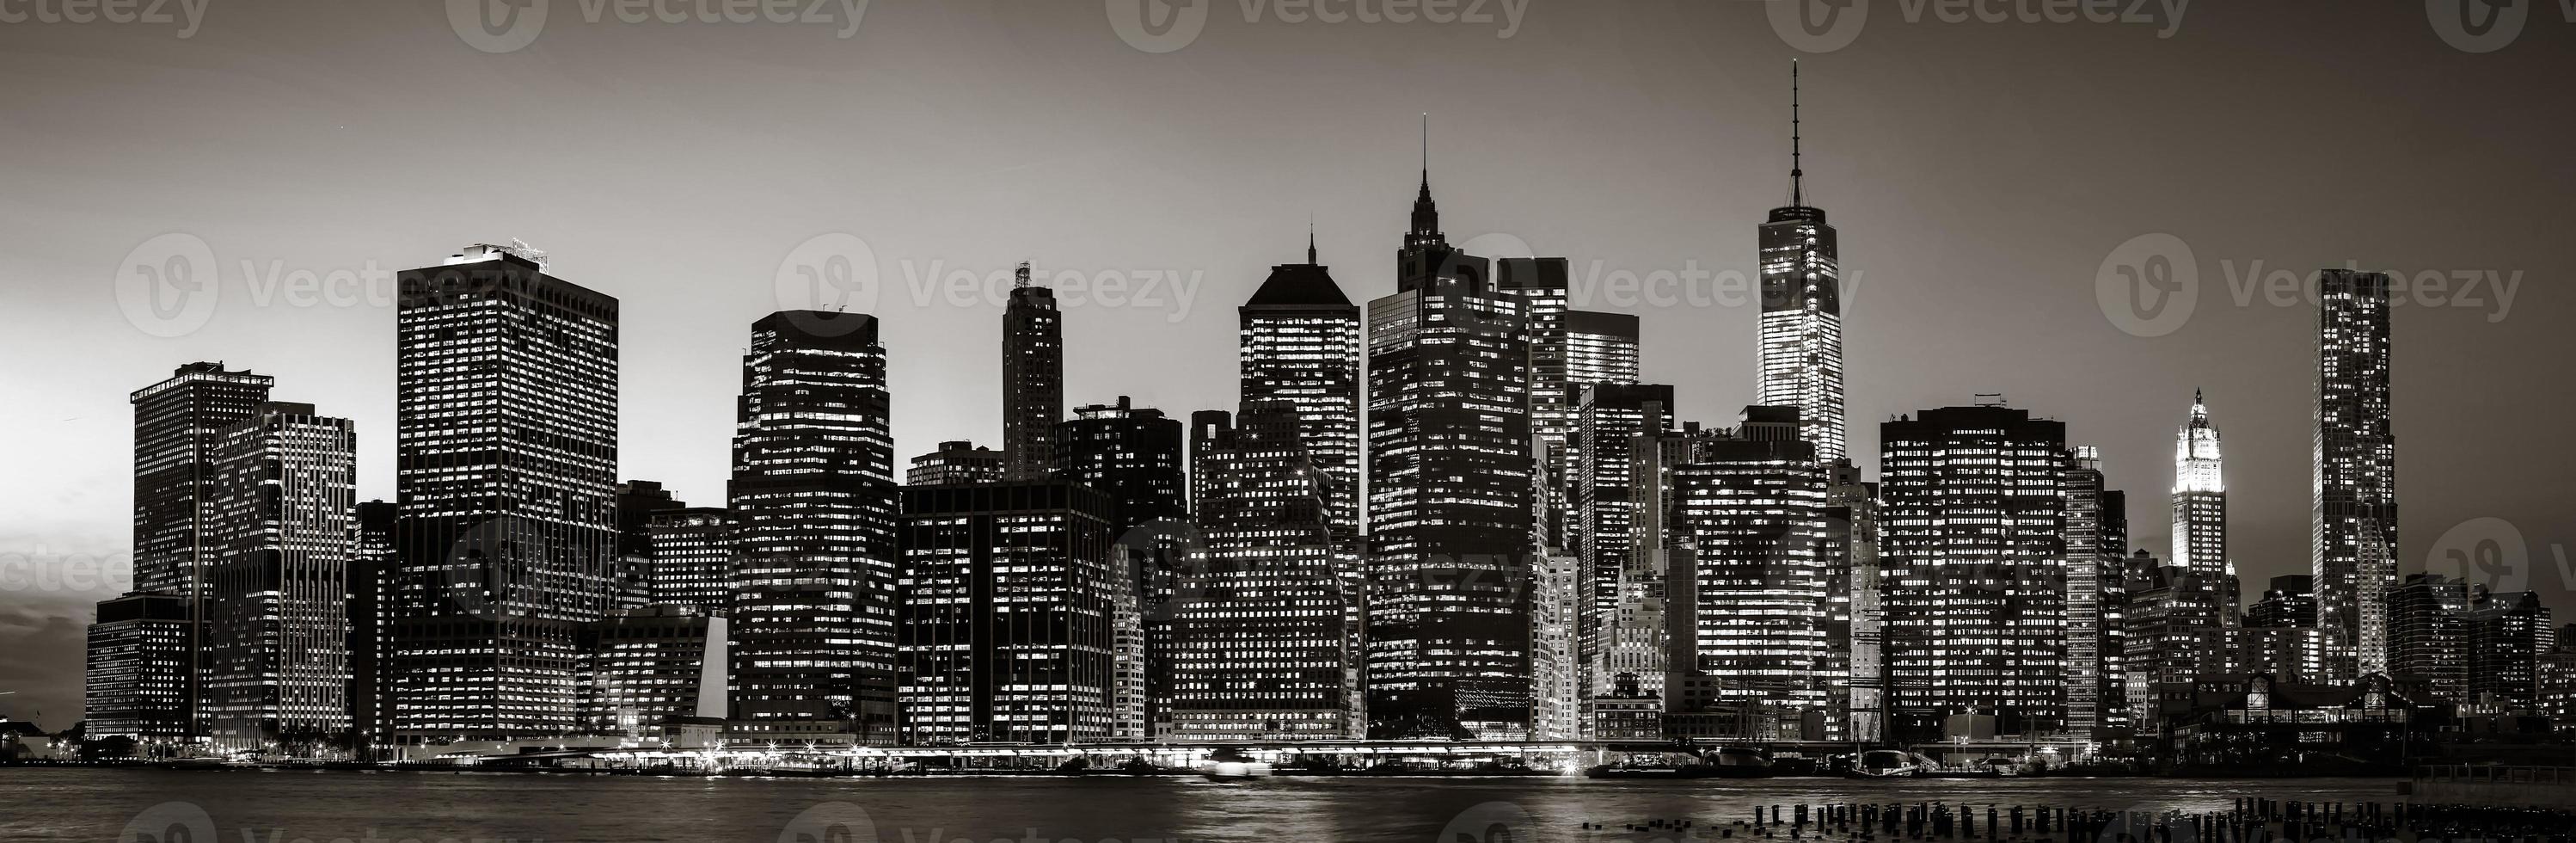 Skyline-Panorama von New York City foto